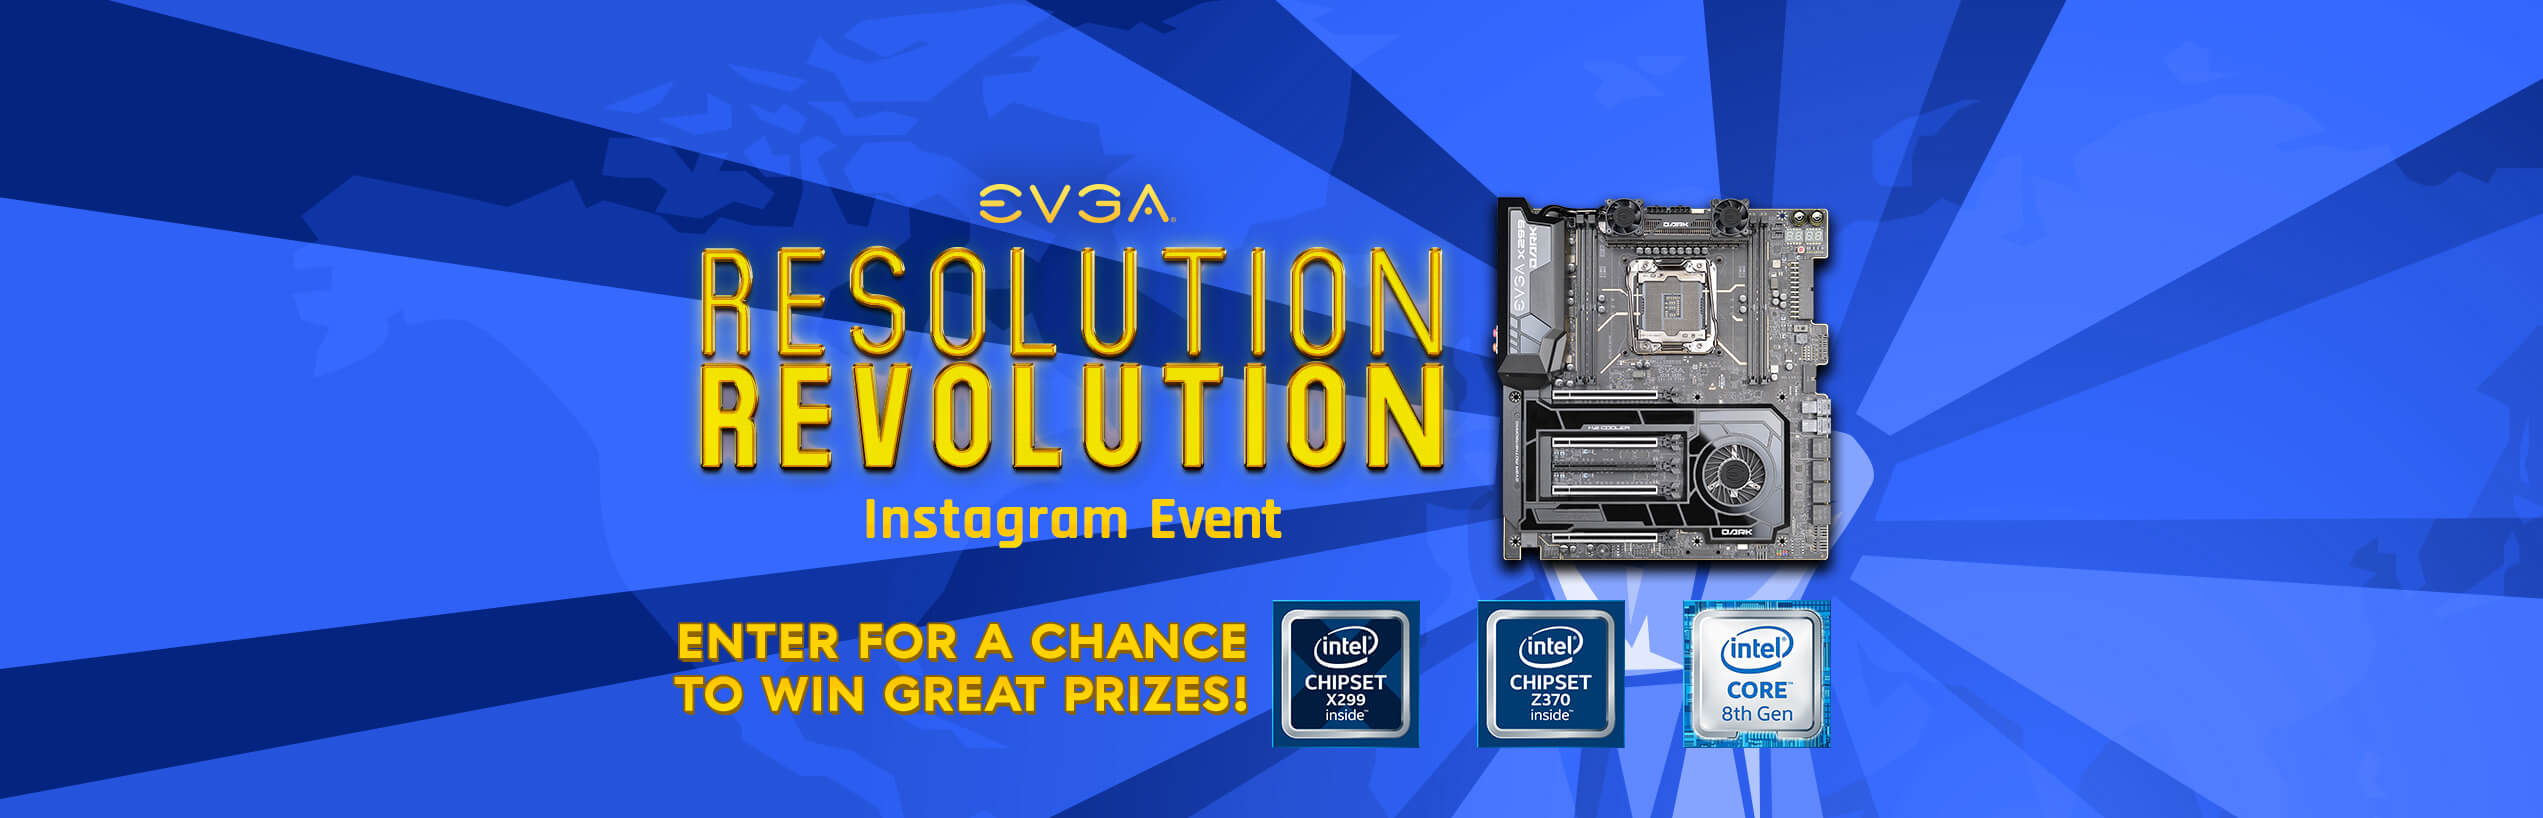 EVGA Resolution Revolution Instagram Event